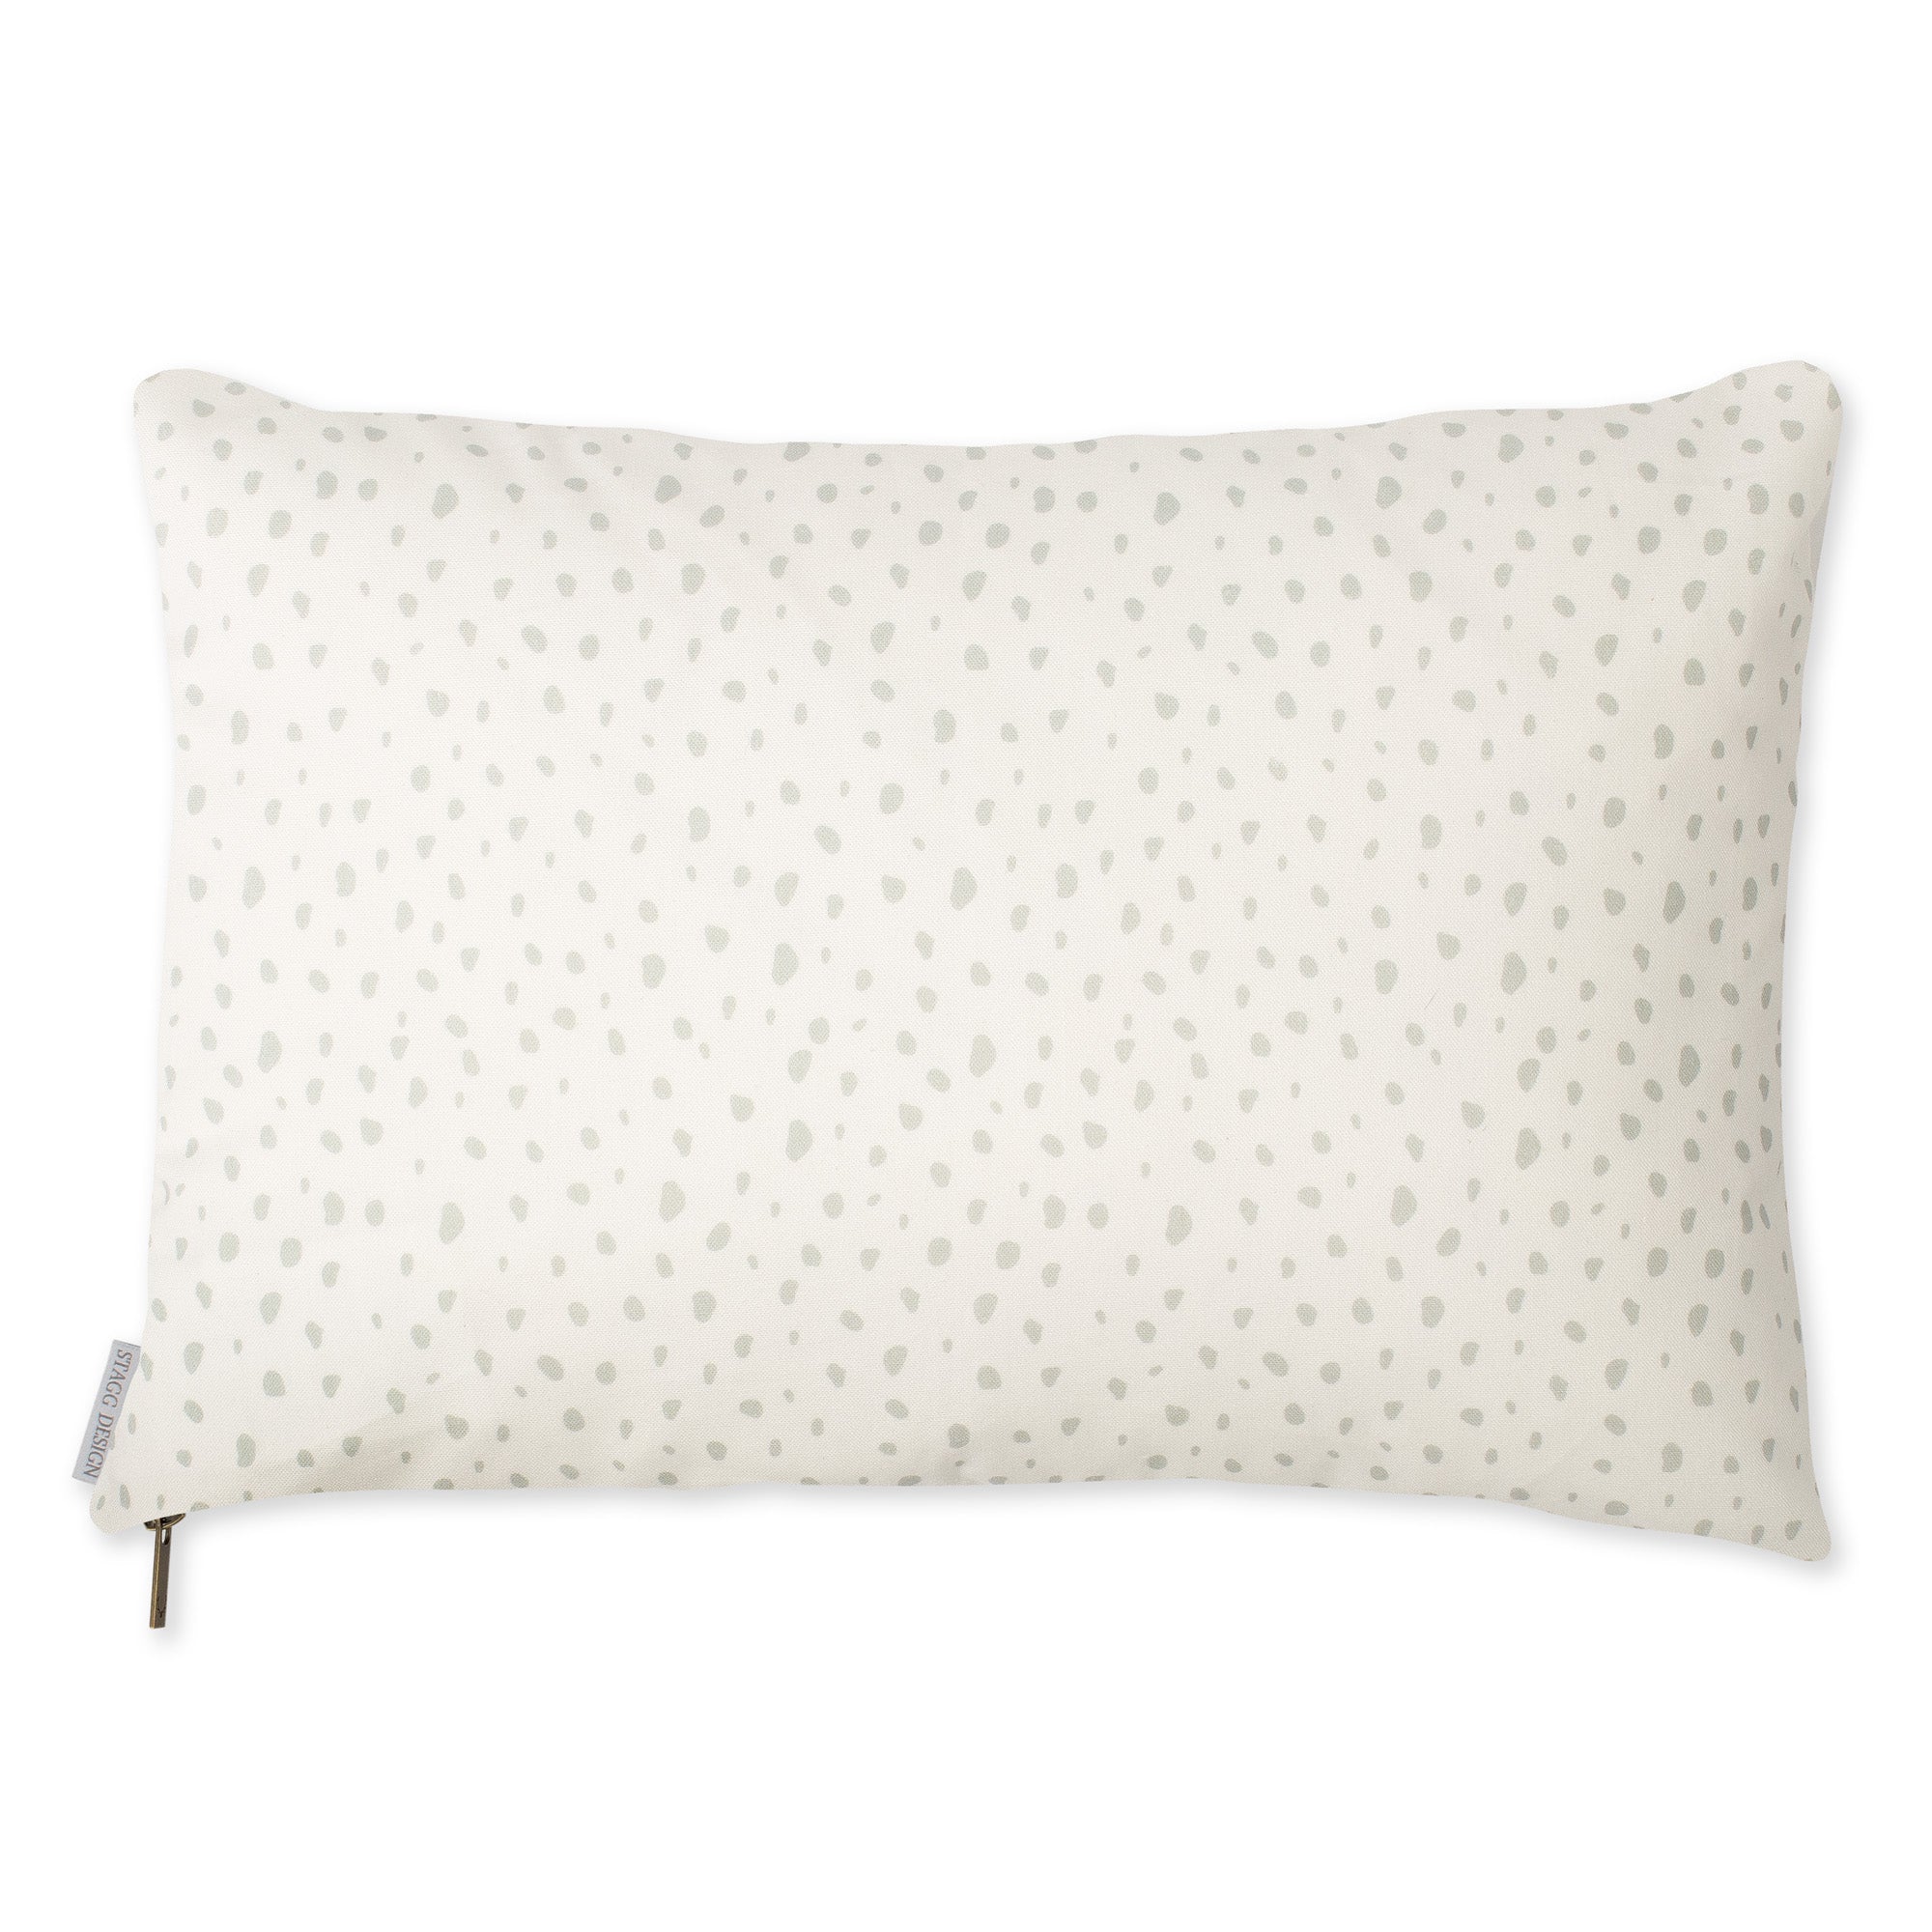 Modern Dot Pillow - Grey on White